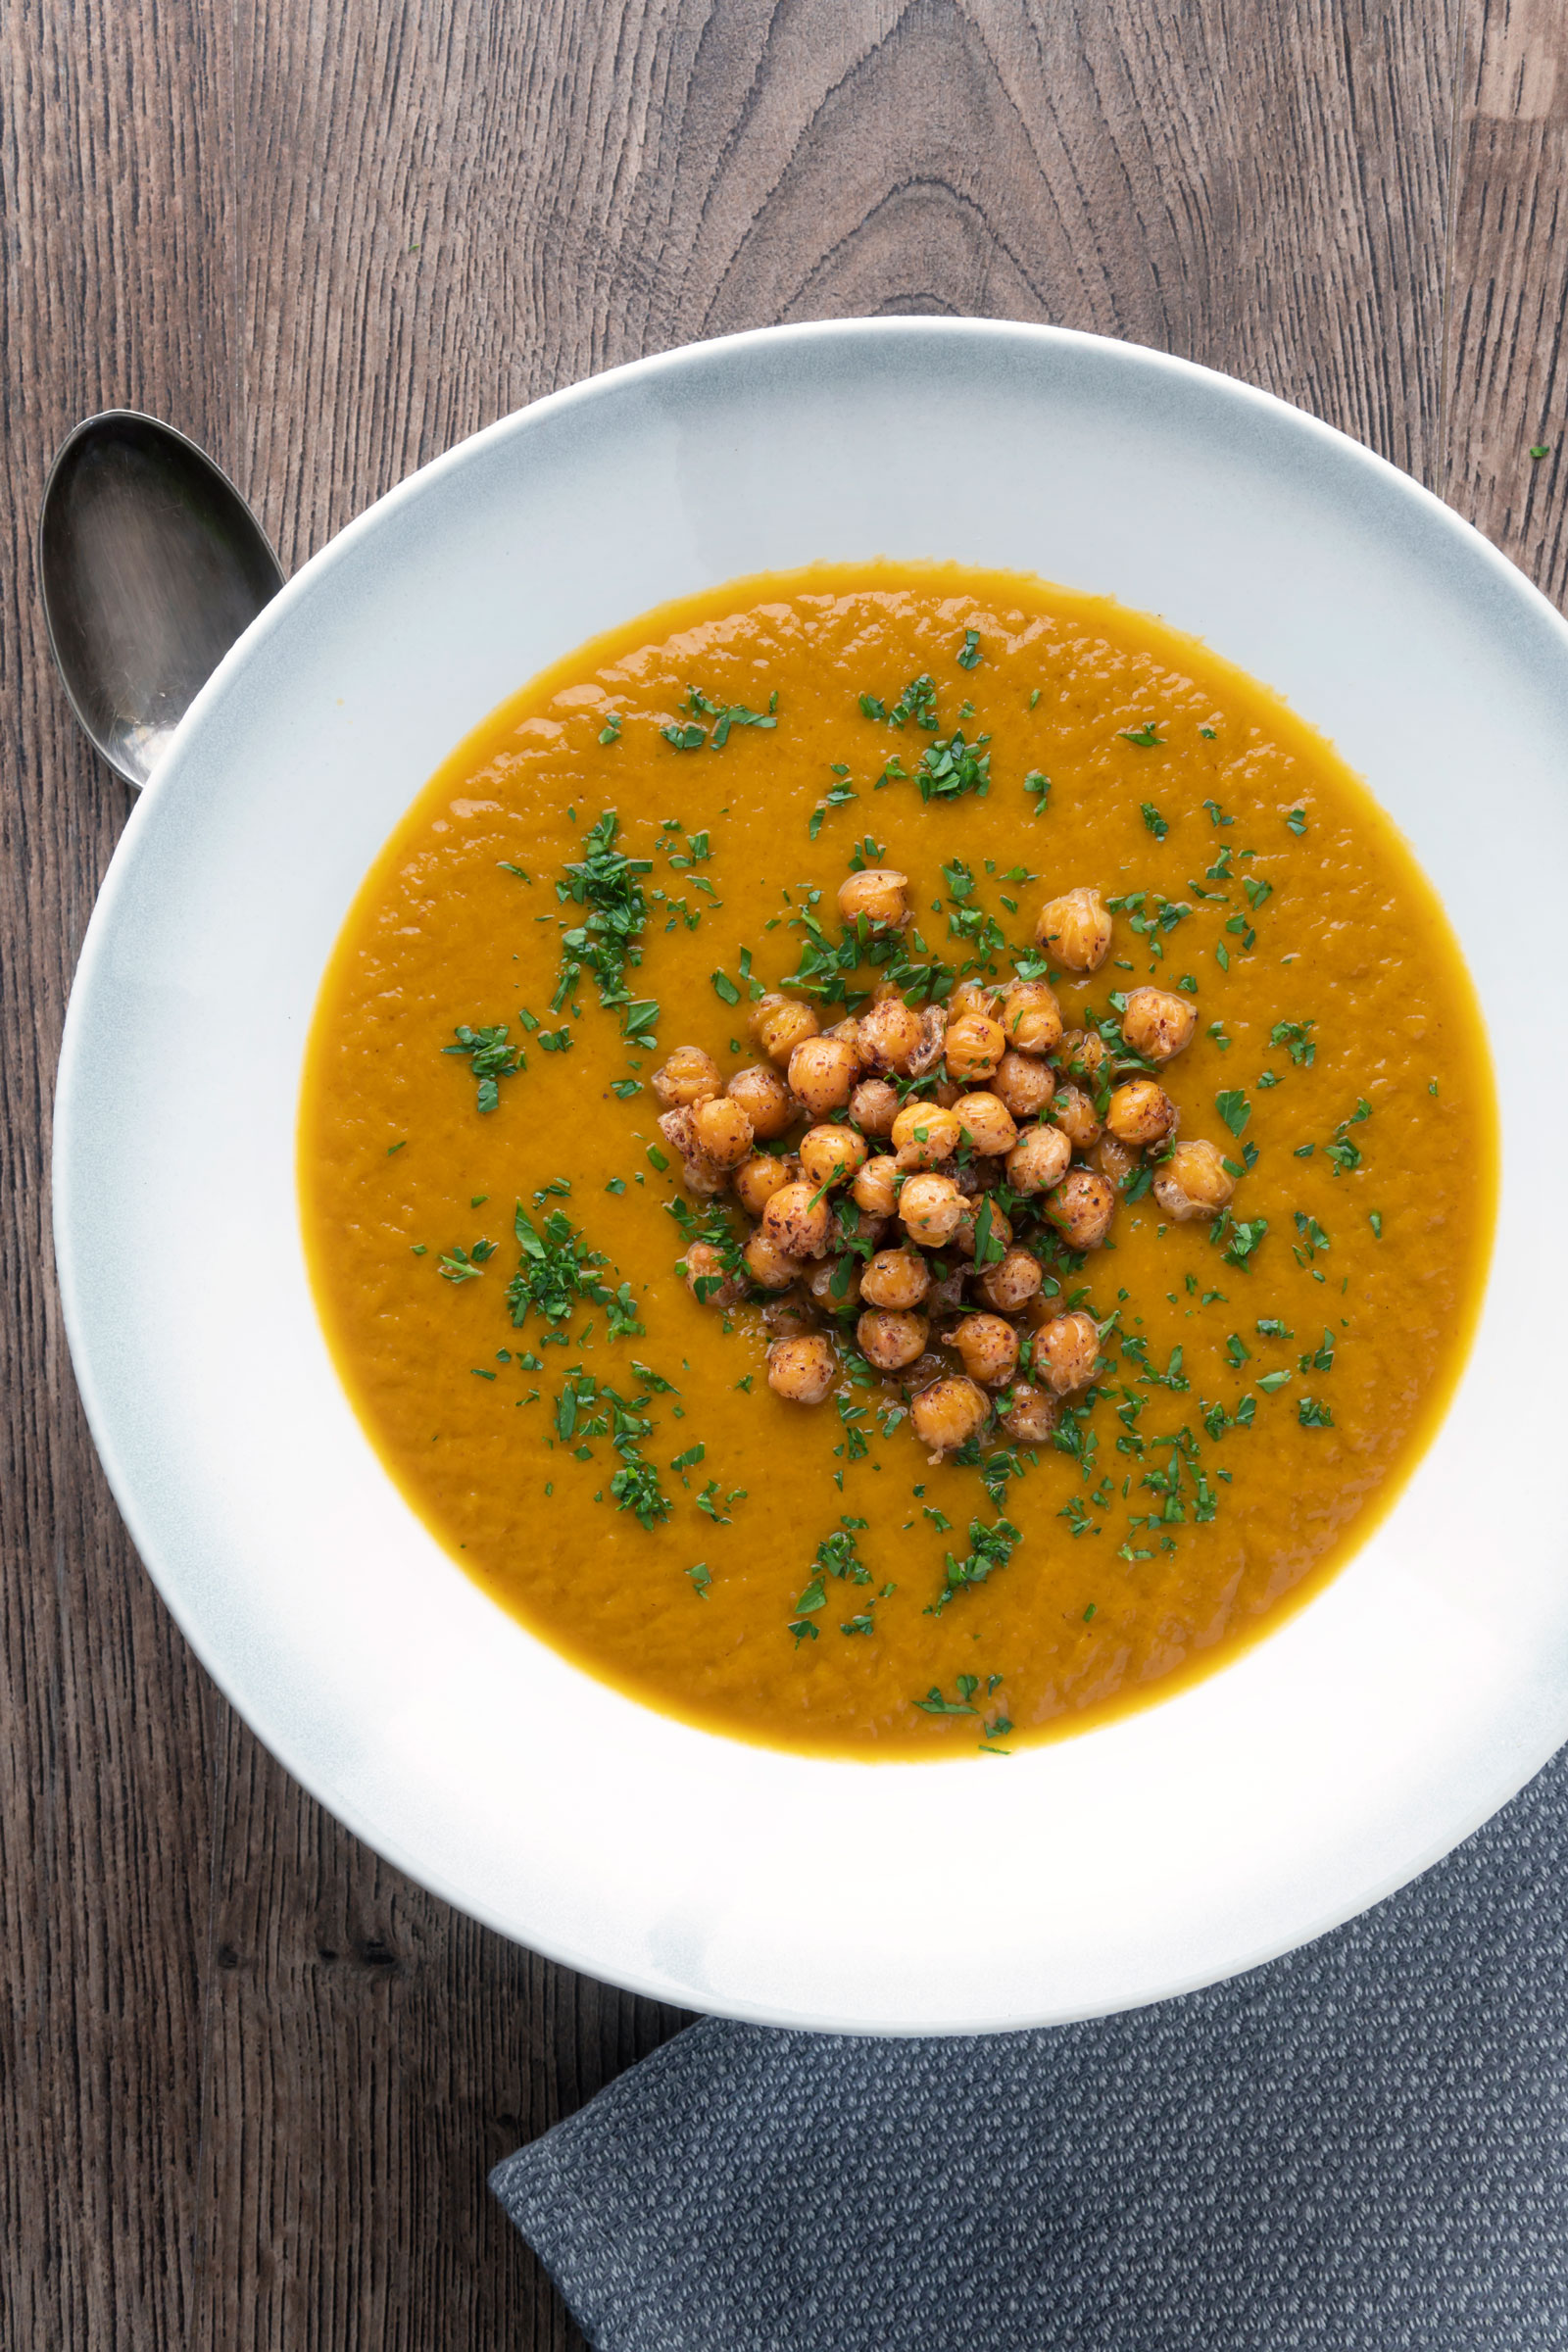 https://www.krumpli.co.uk/wp-content/uploads/2021/05/Roasted-Carrot-Soup-with-Crispy-Chickpeas-01.jpg